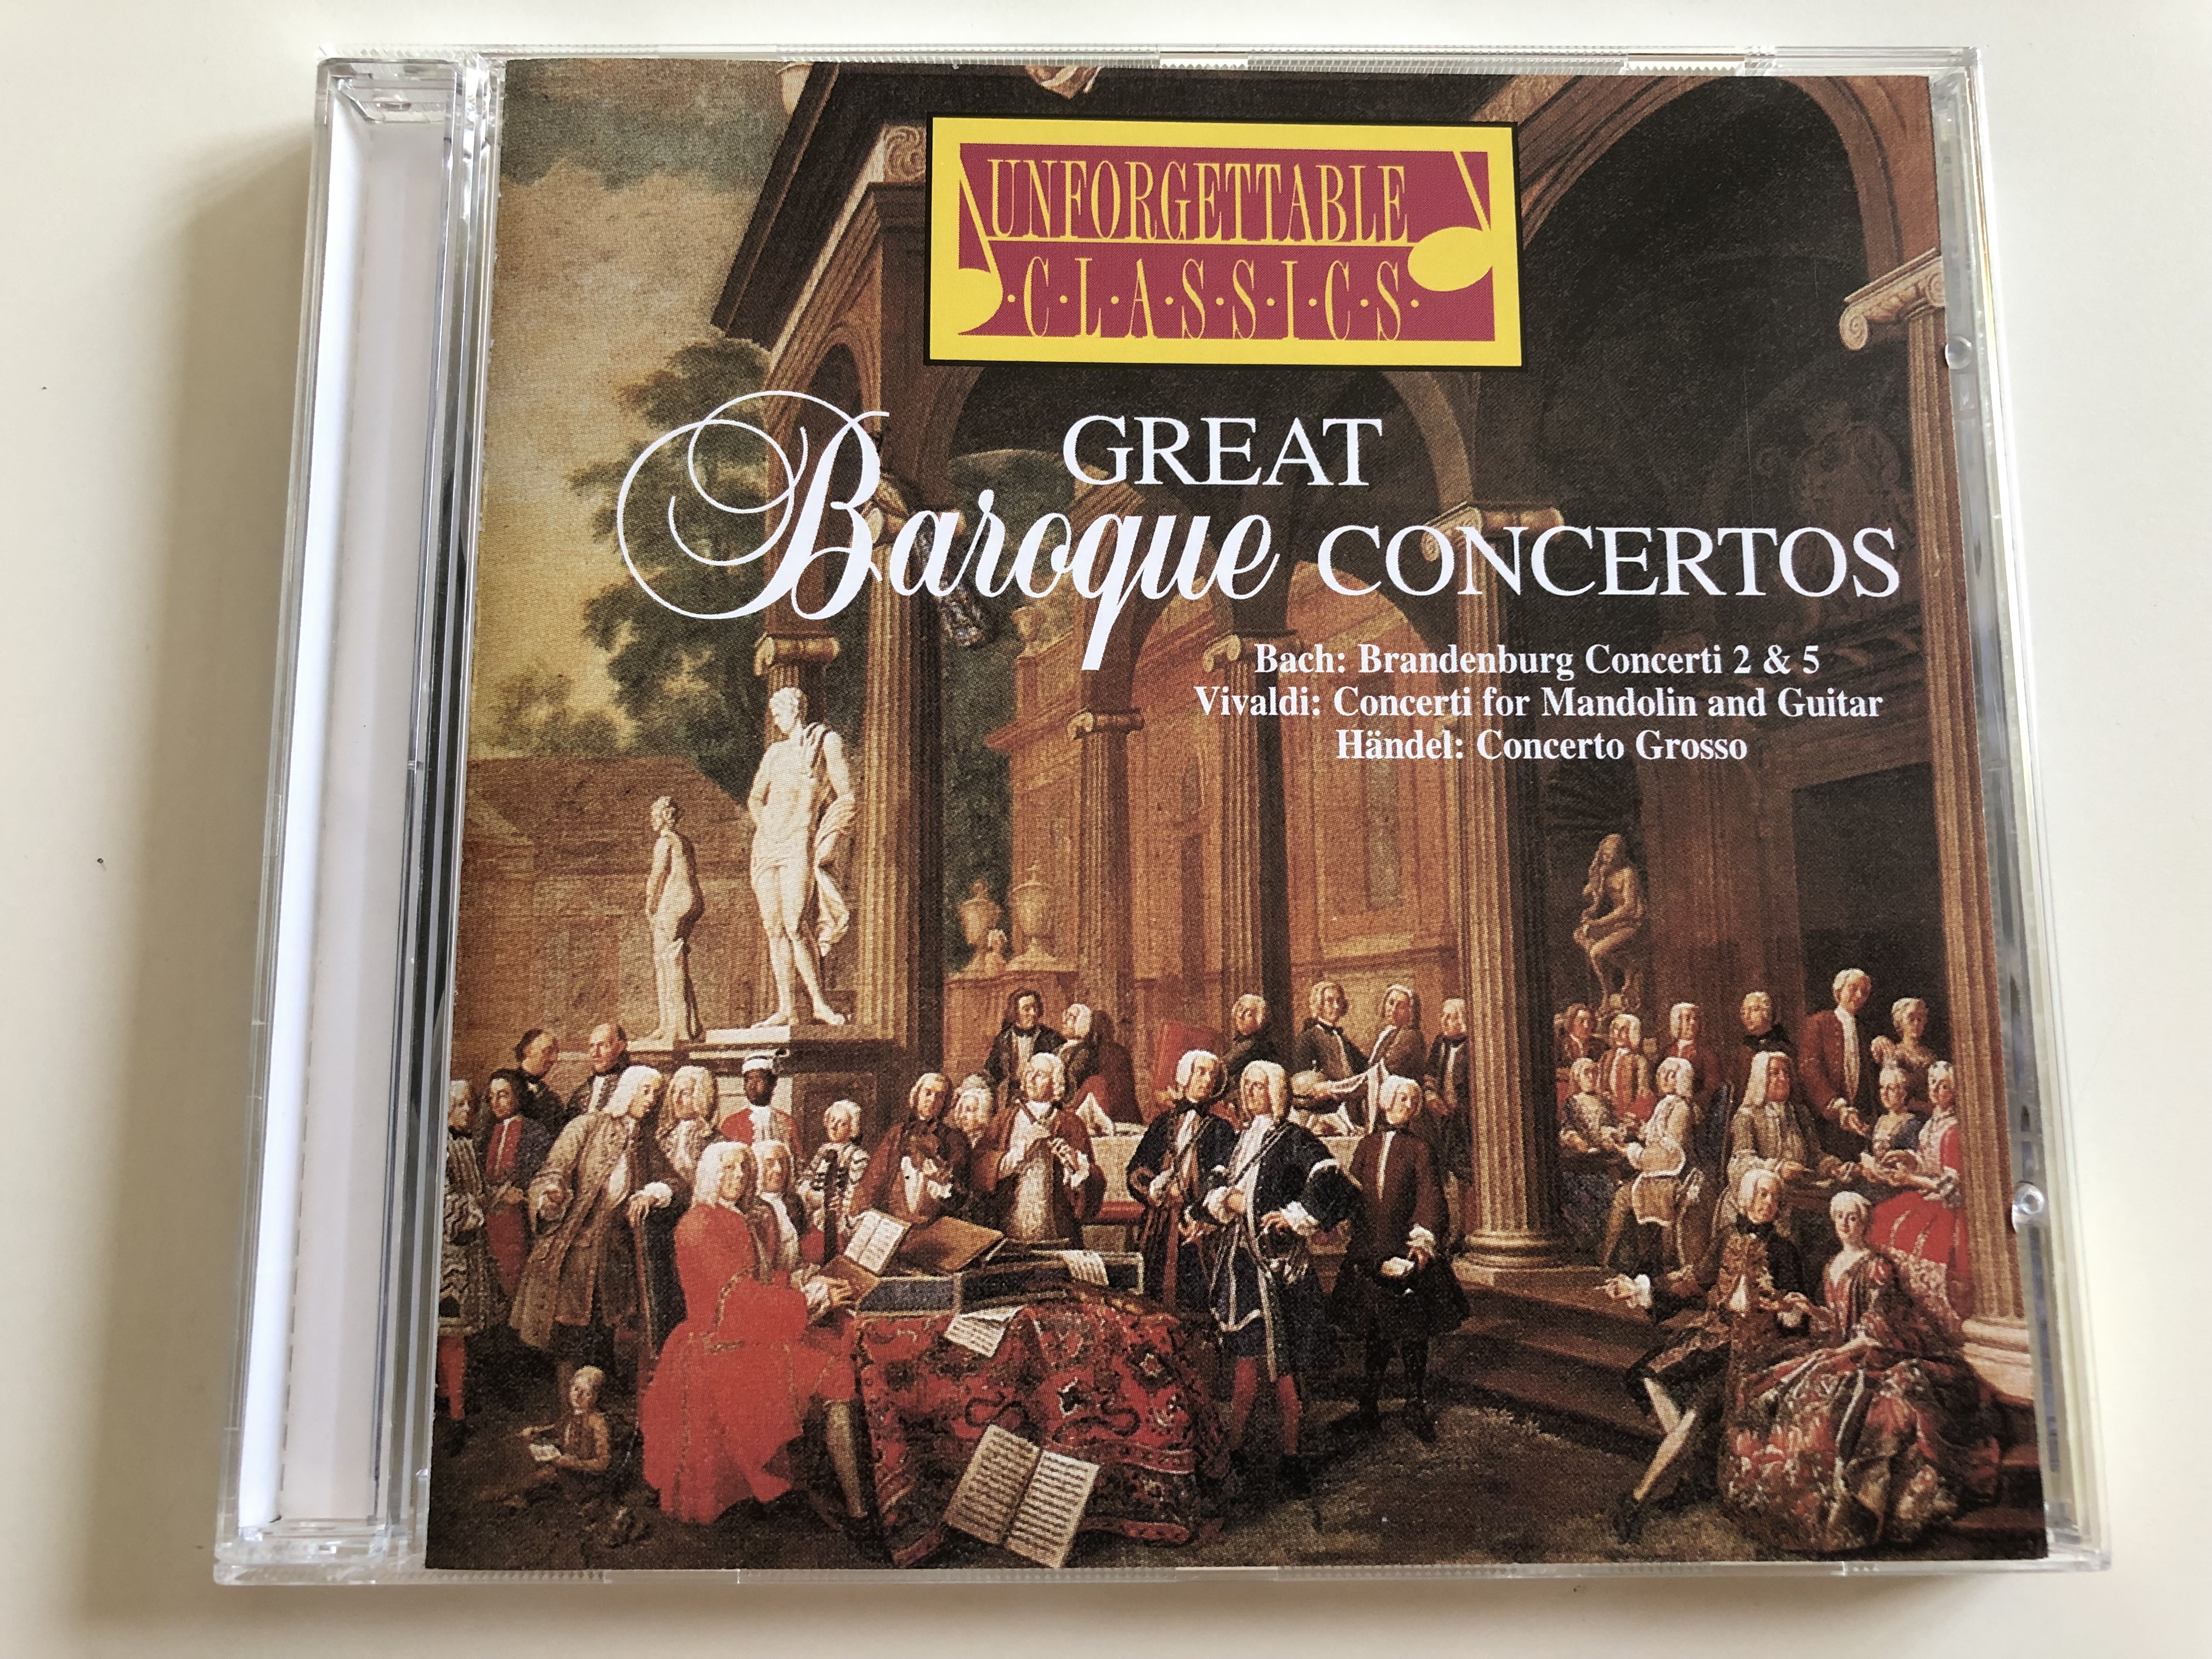 great-baroque-concertos-bach-brandenburg-concerti-2-5-vivaldi-concerti-for-mandolin-and-guitar-h-ndel-concerto-grosso-unforgettable-classics-audio-cd-1995-uc-1509-1-.jpg